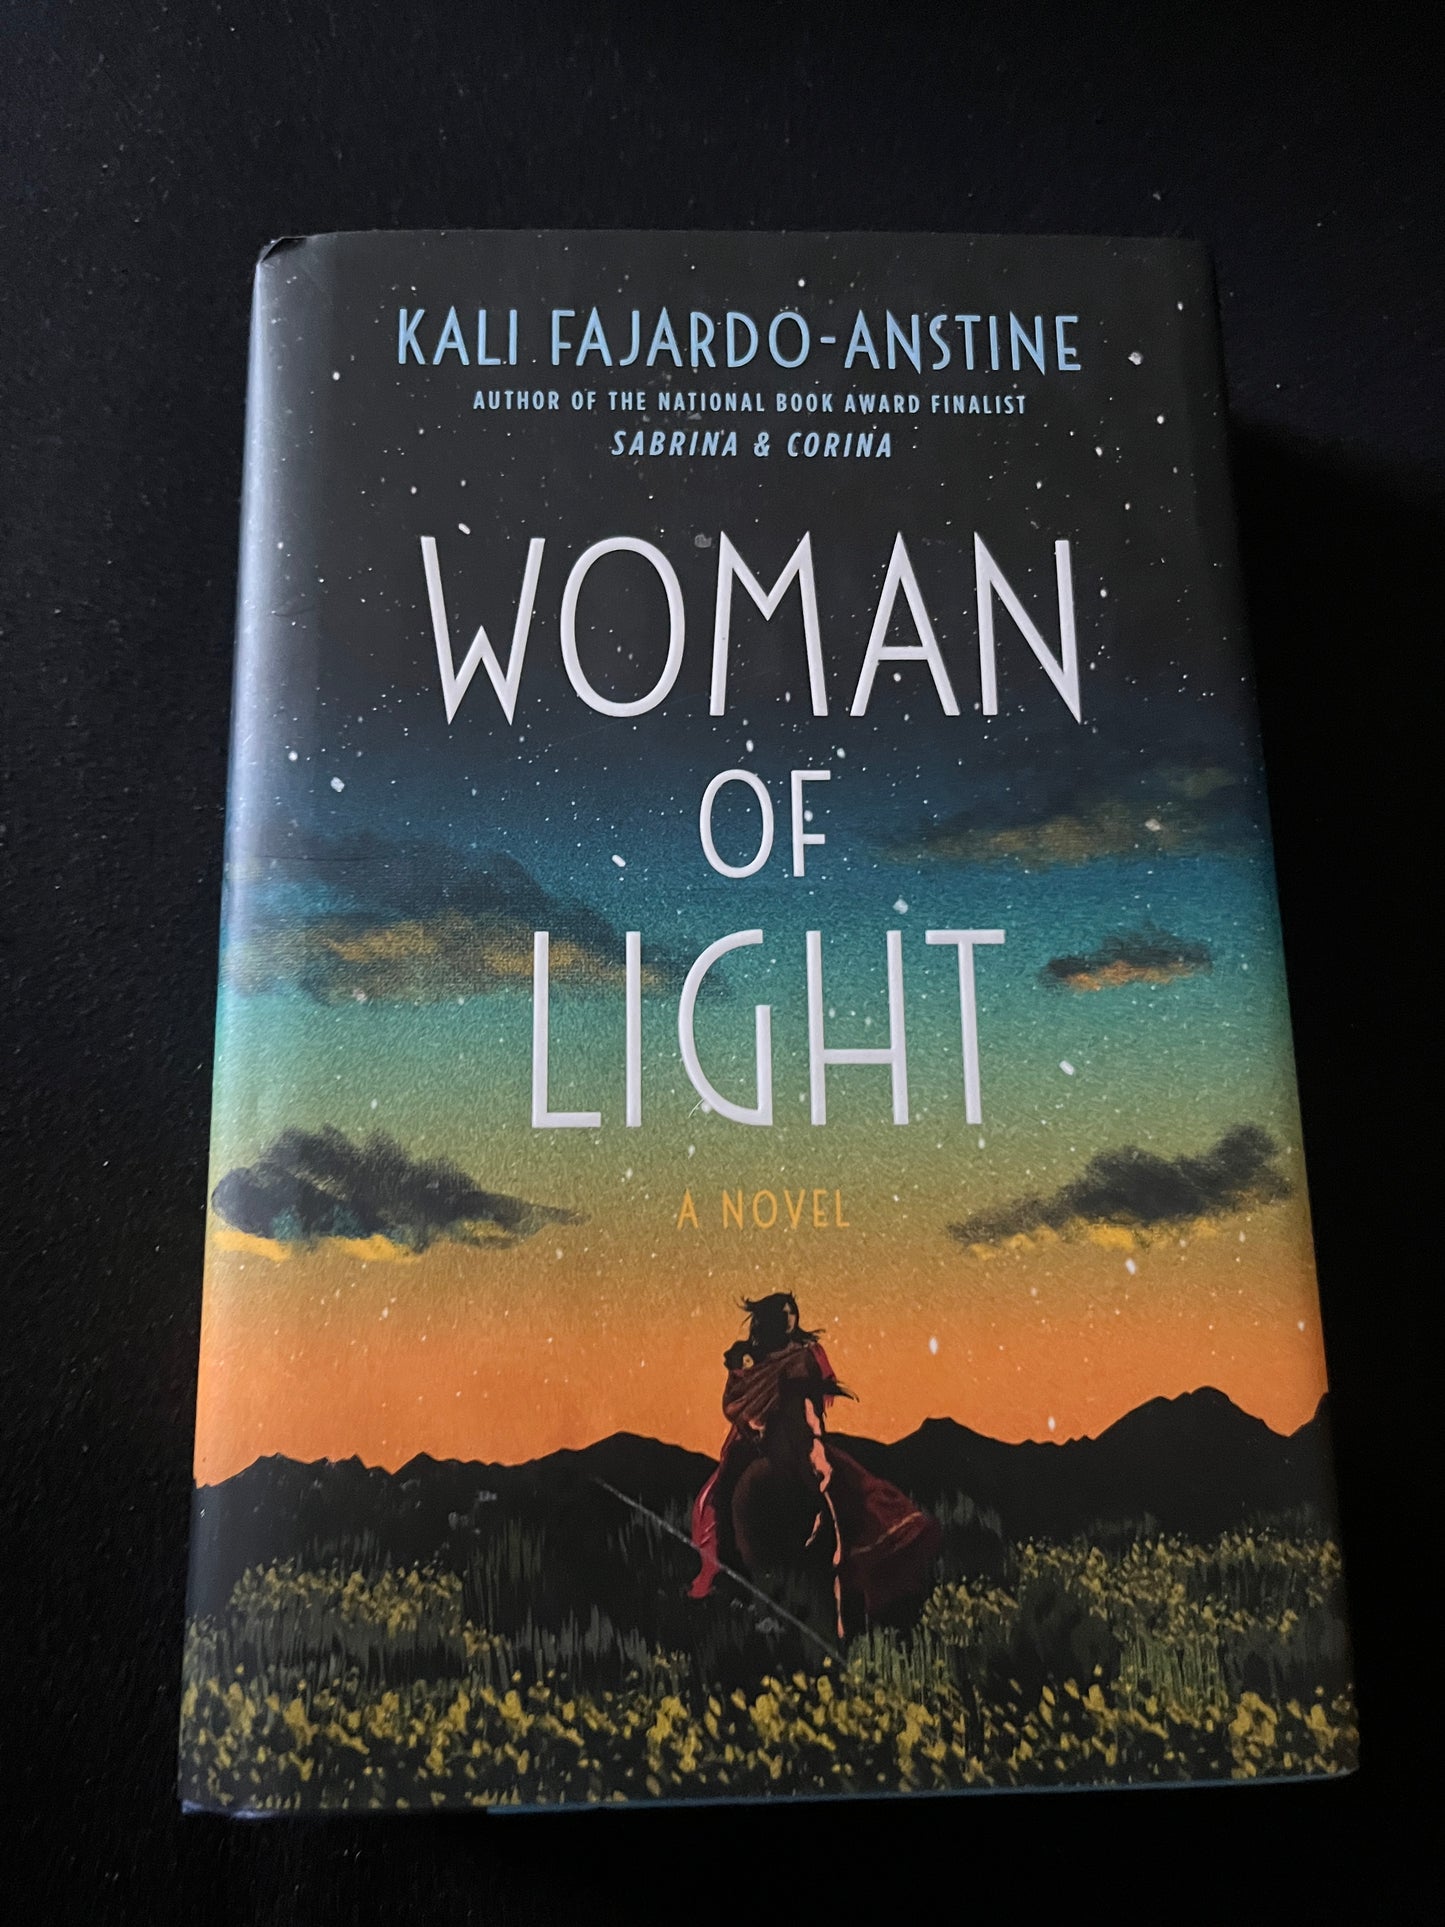 WOMAN OF LIGHT by Kali Fajardo-Anstine